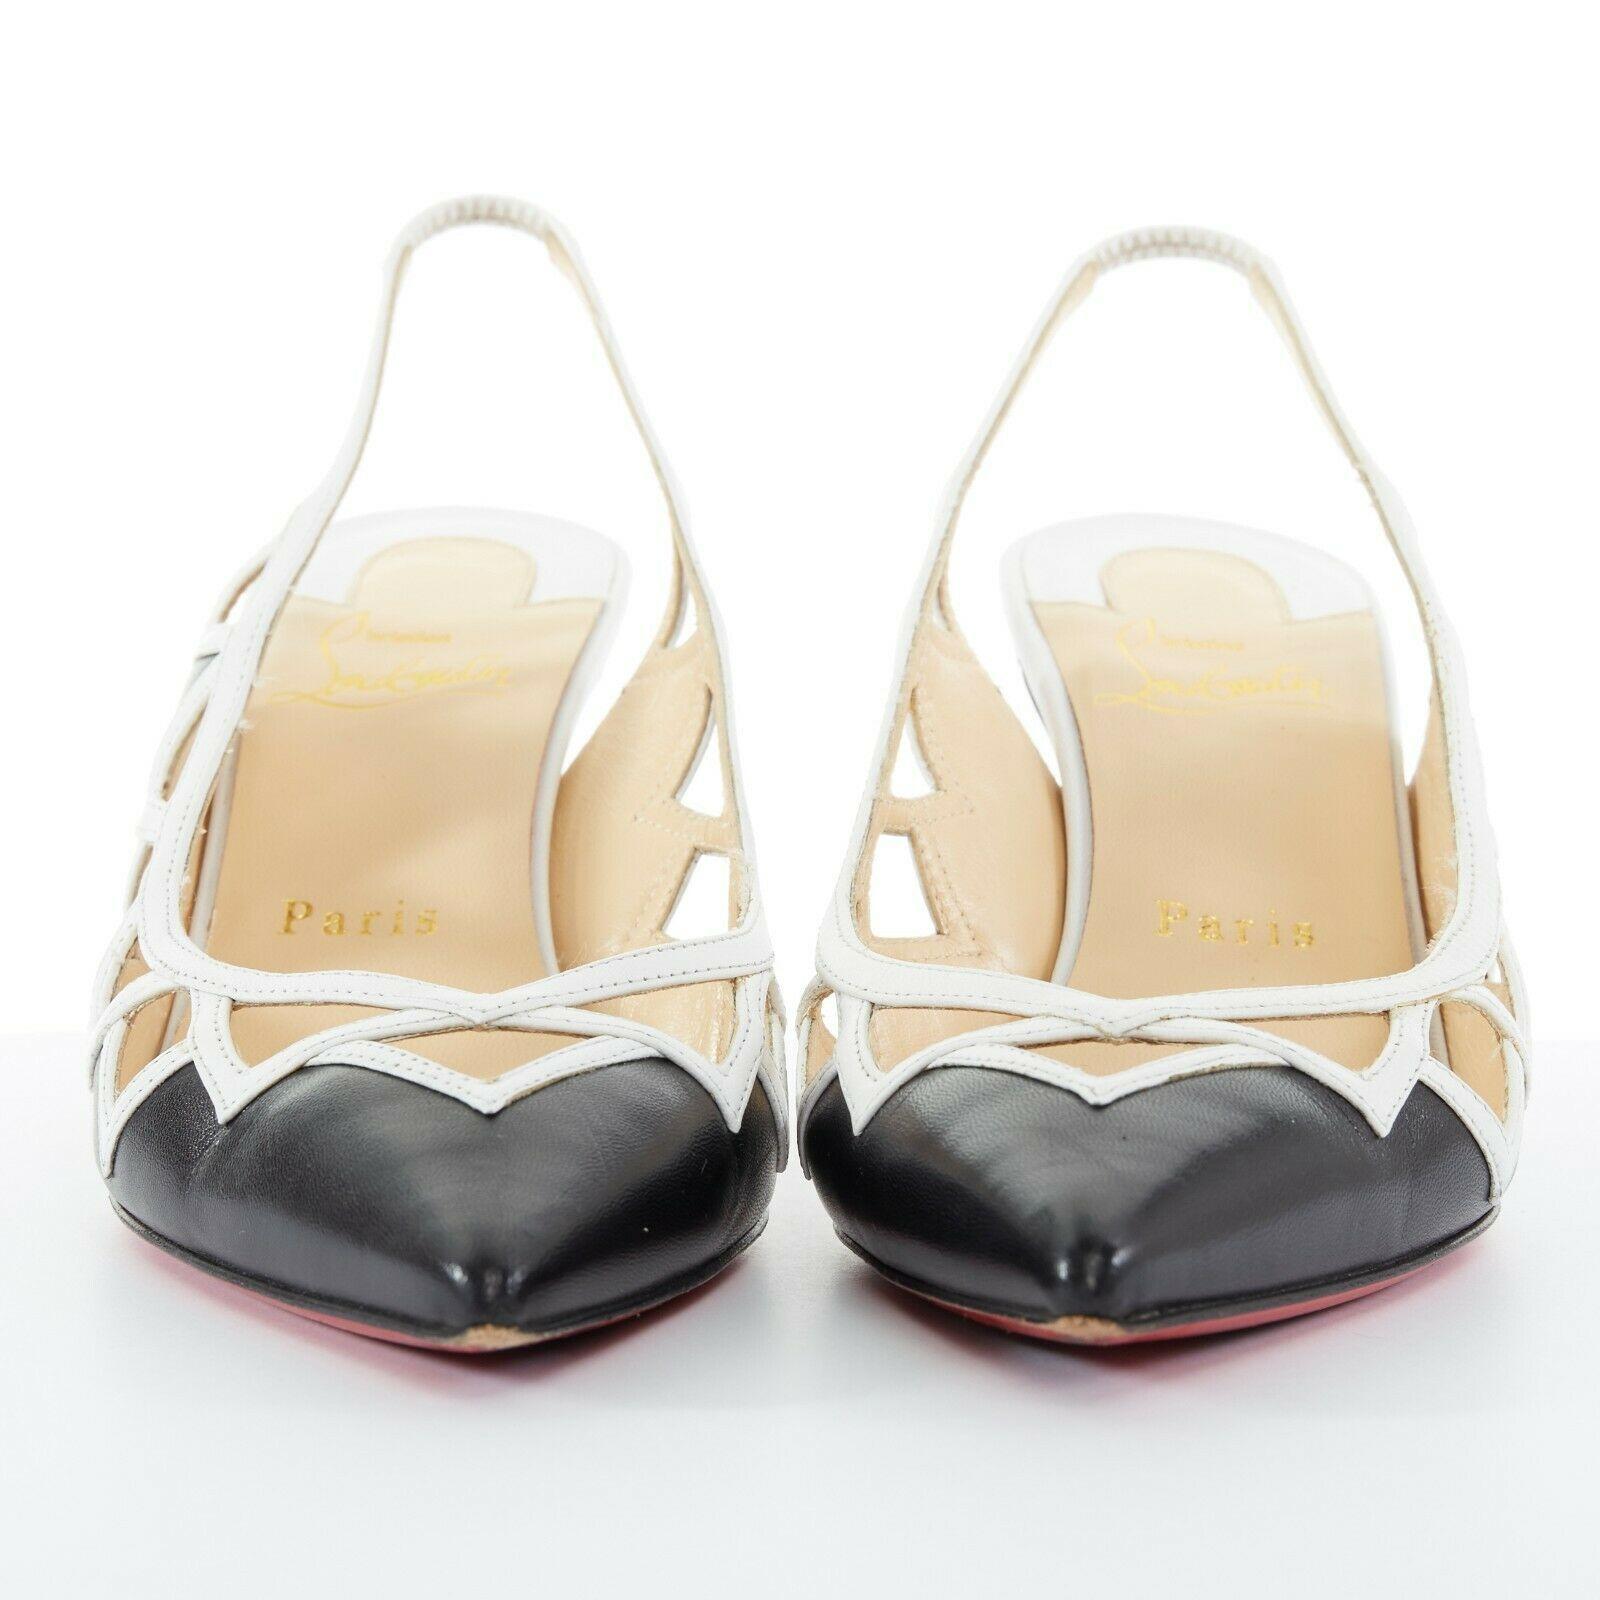 black and white louboutin heels